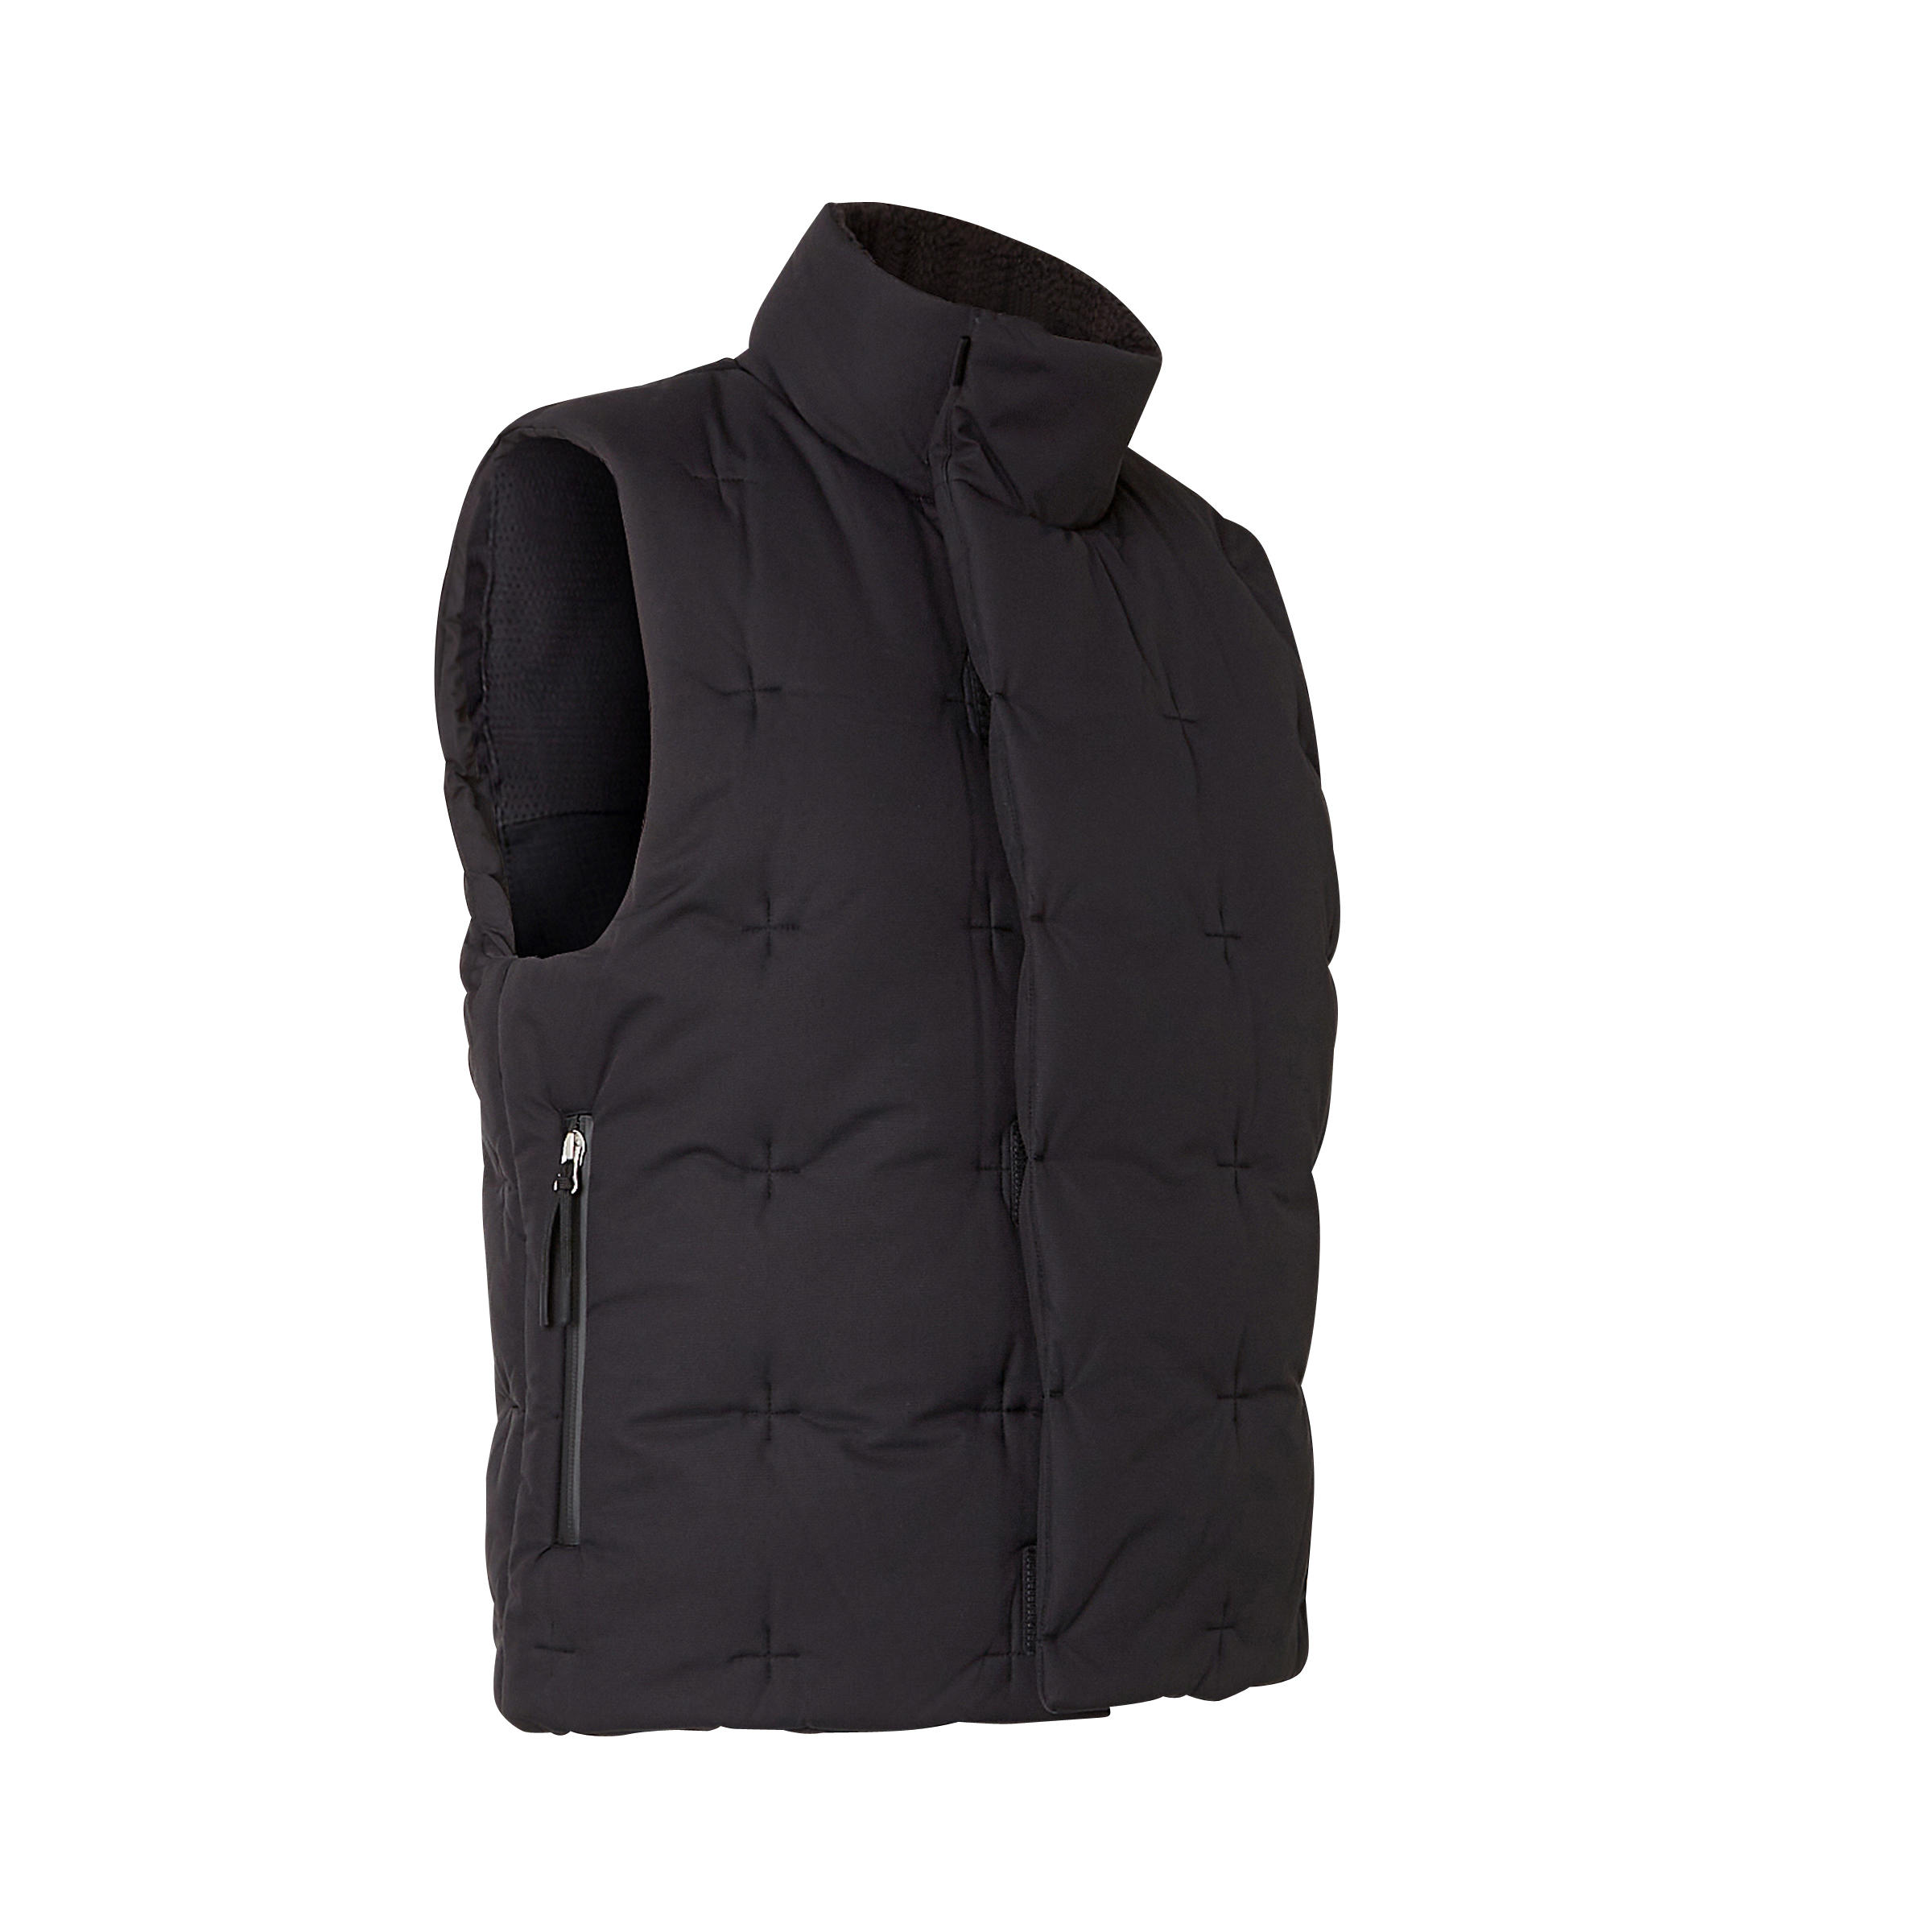 men's warm running sleeveless padded jacket - Beige 2/7